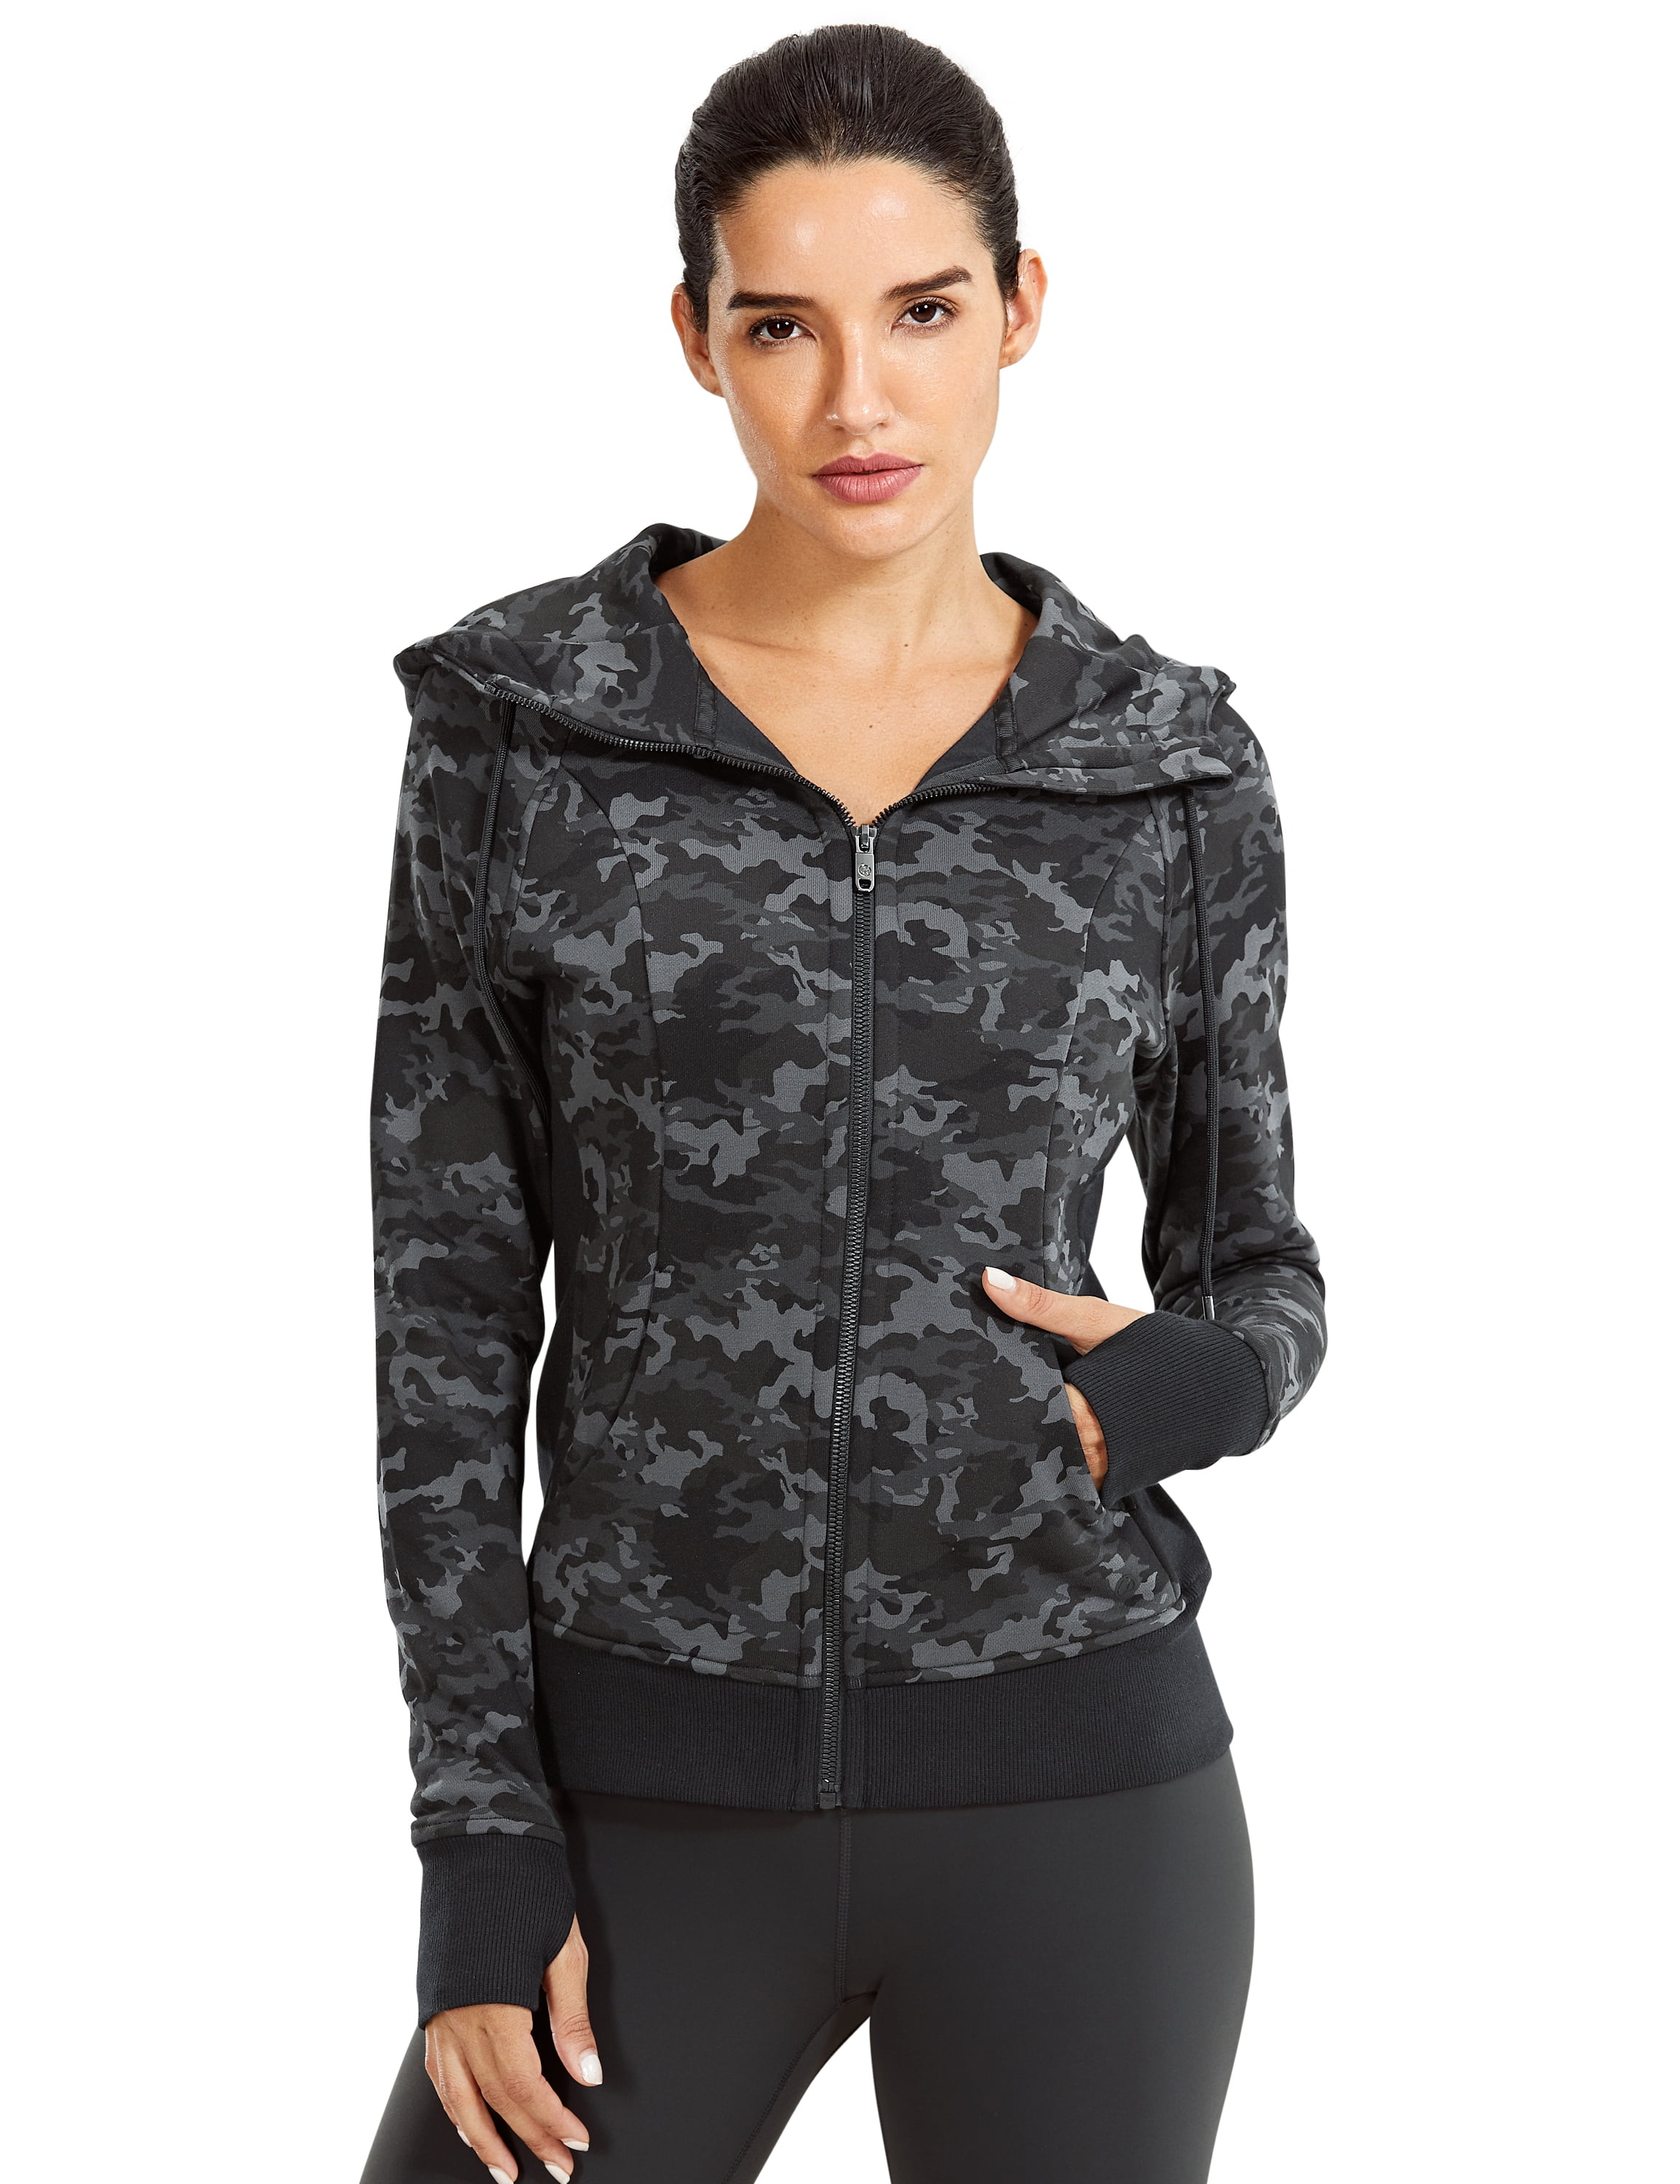 CRZ YOGA Womens Cotton Hoodies Sport Workout Full Zip Hooded Jackets Sweatshirt 